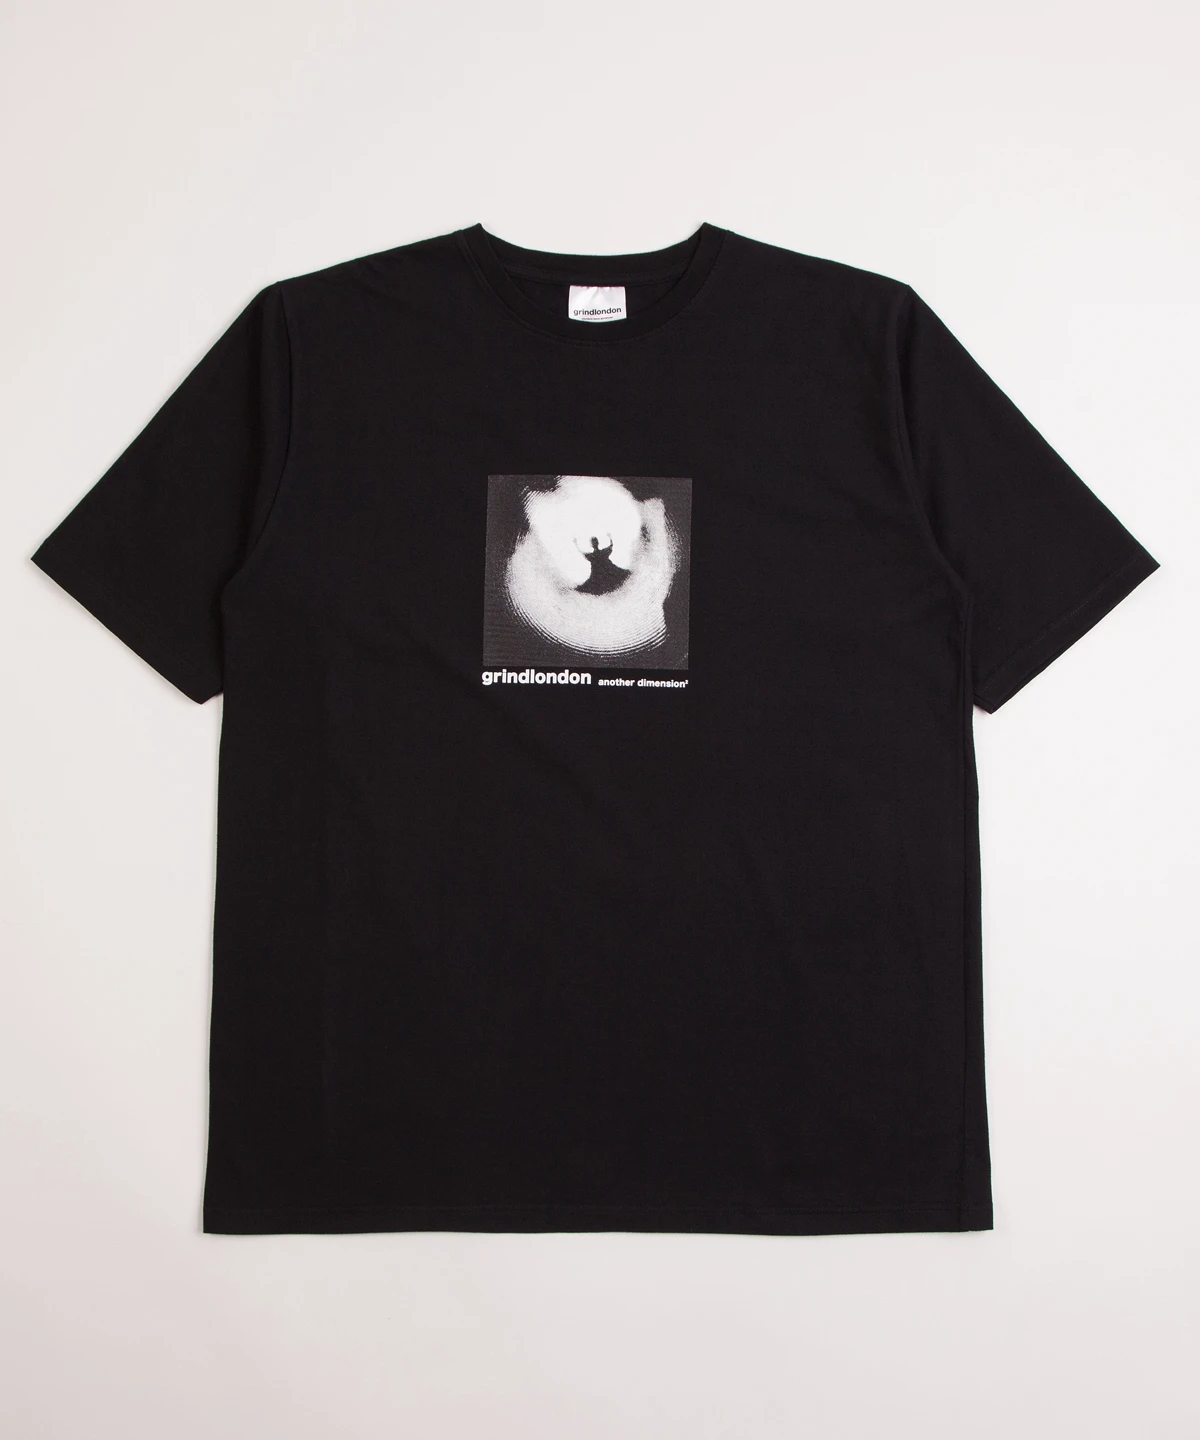 grindlondon 100% cotton another dimension t-shirt black